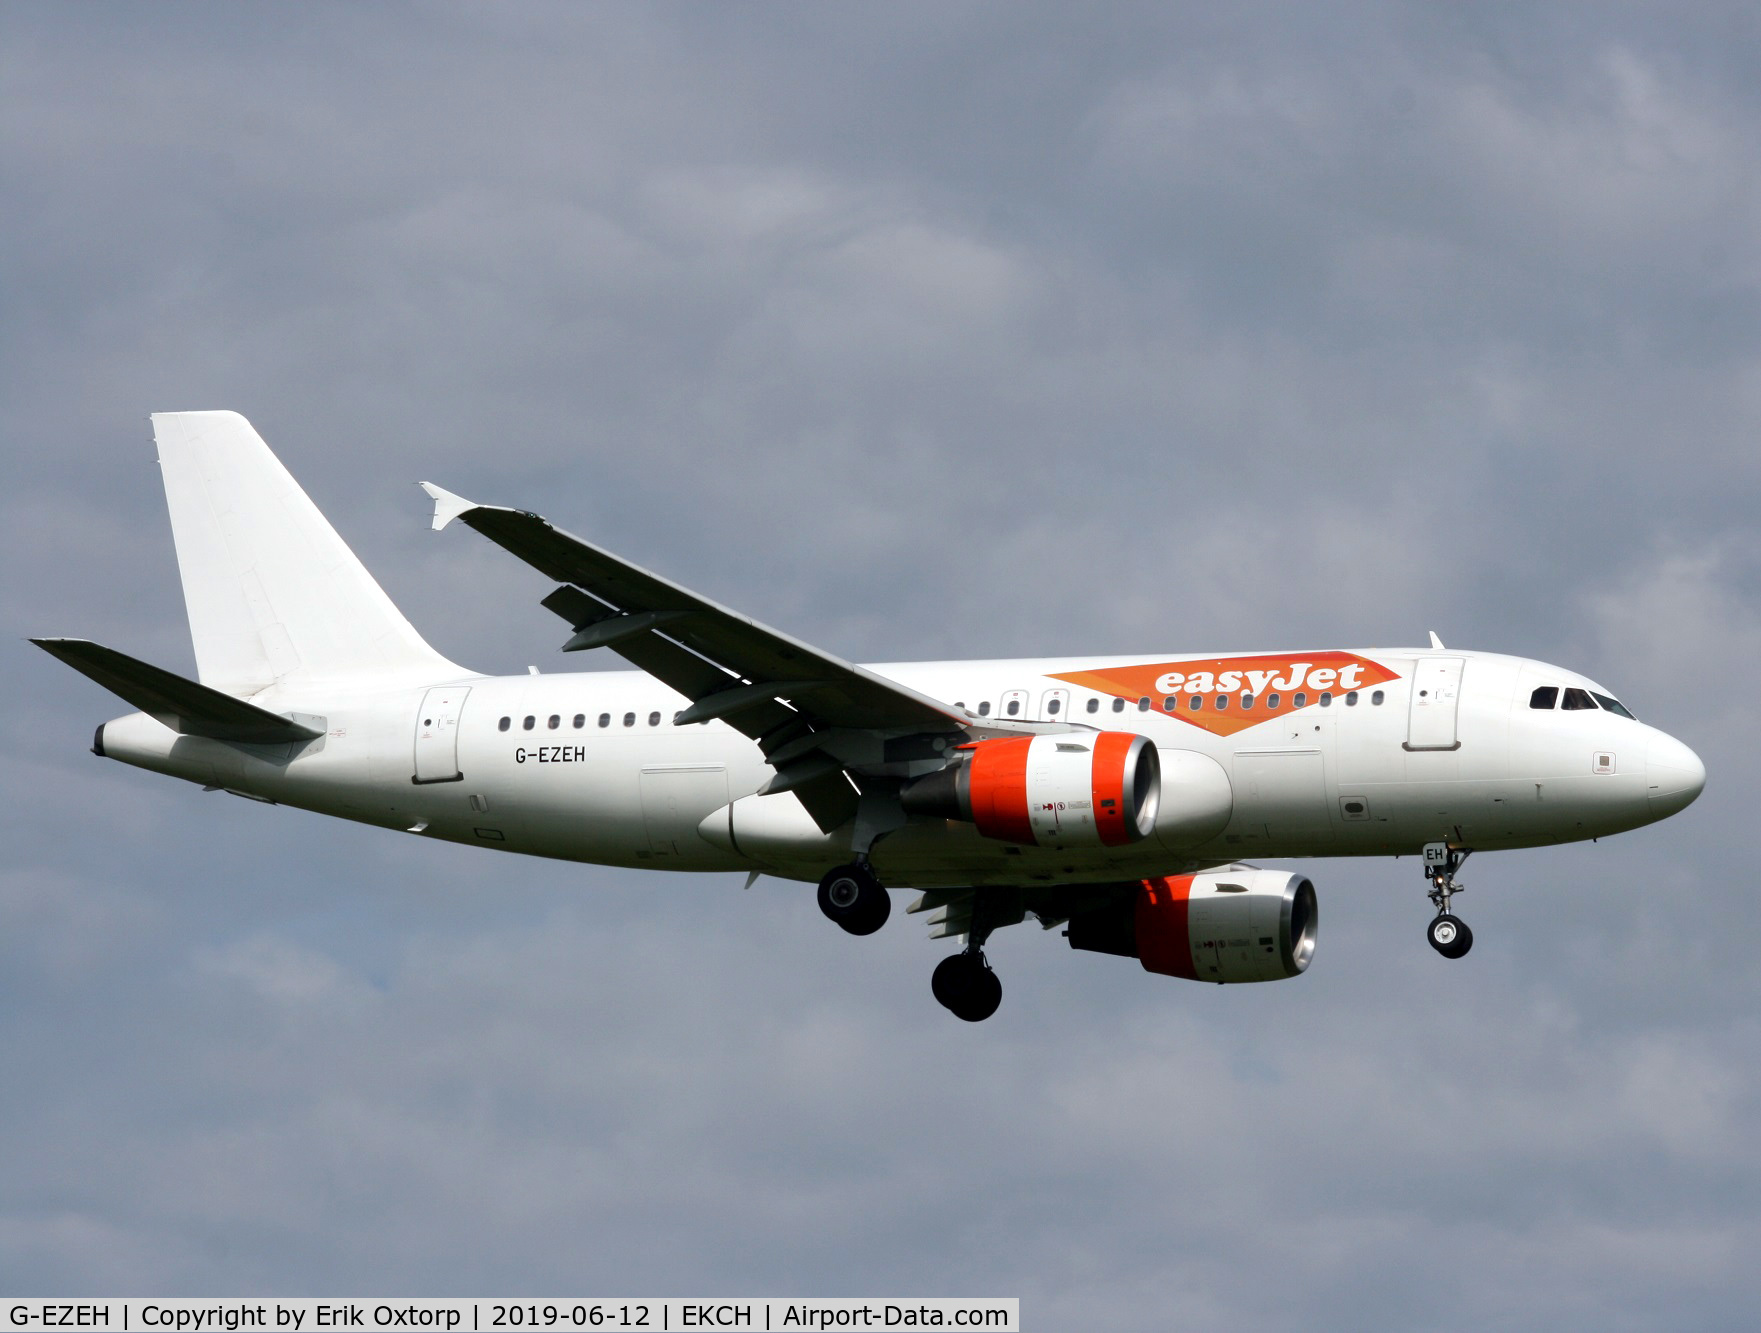 G-EZEH, 2004 Airbus A319-111 C/N 2184, G-EZEH landing rw 04L